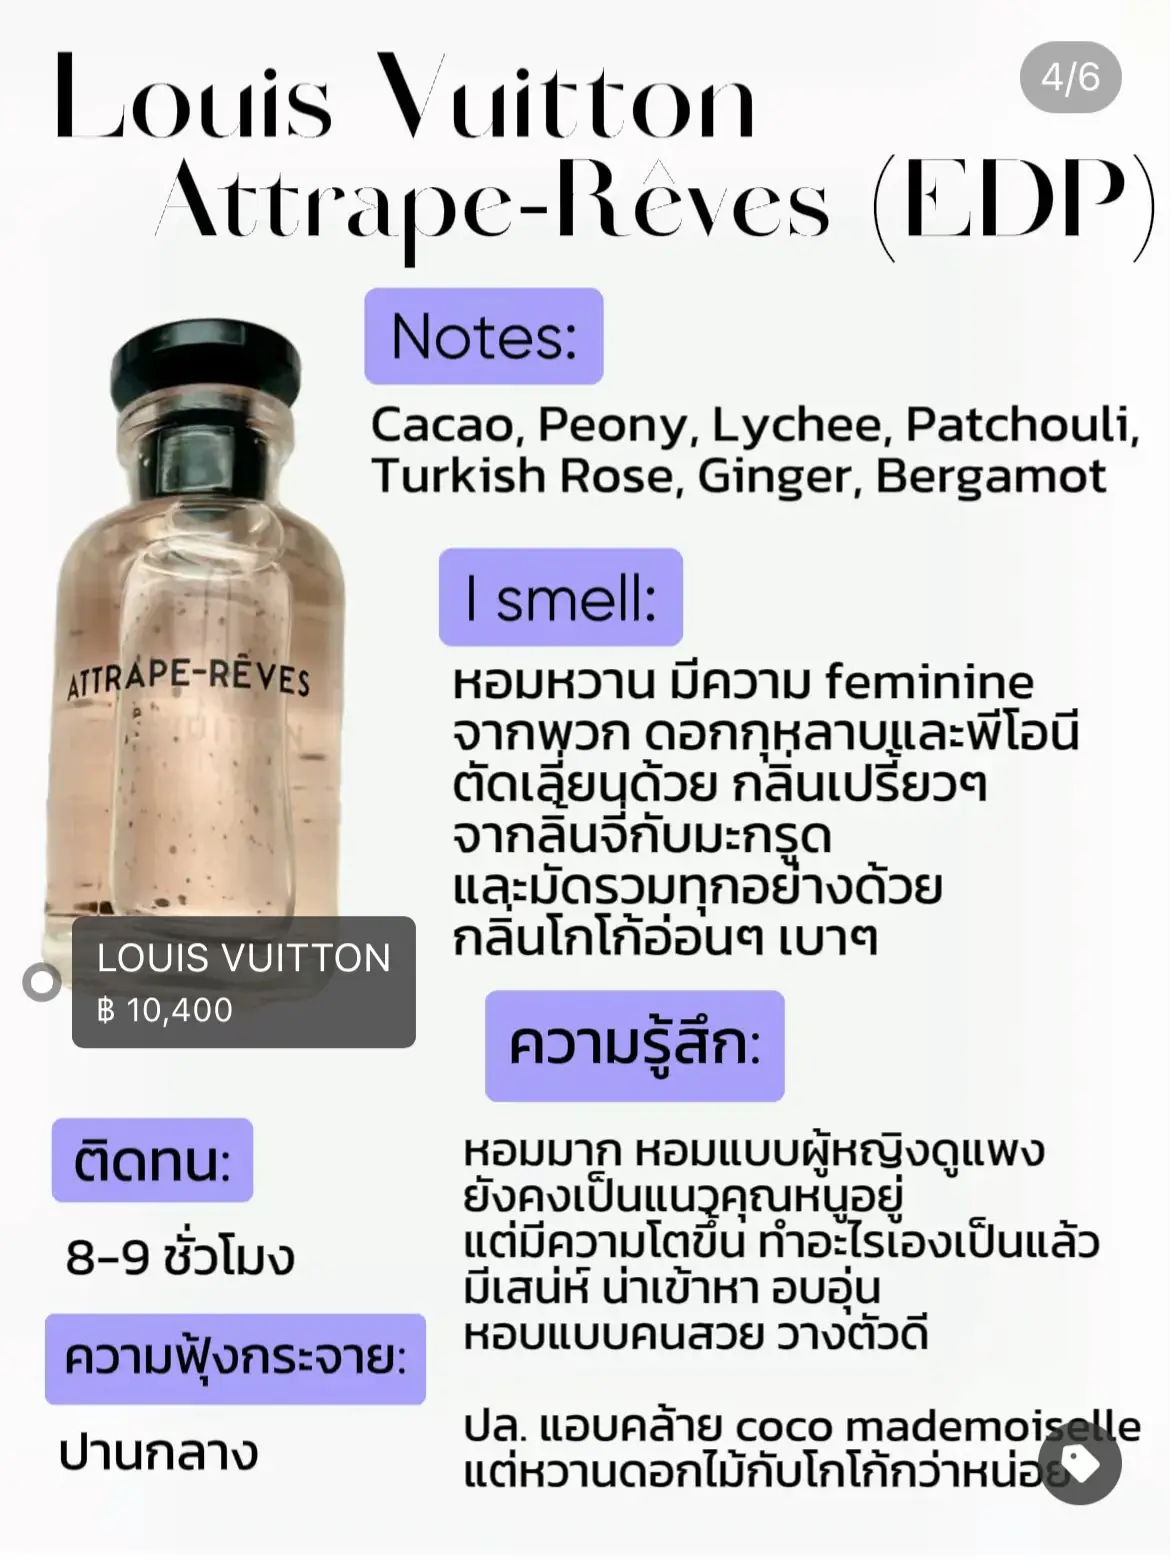 Louis Vuitton Dream Catcher Perfume